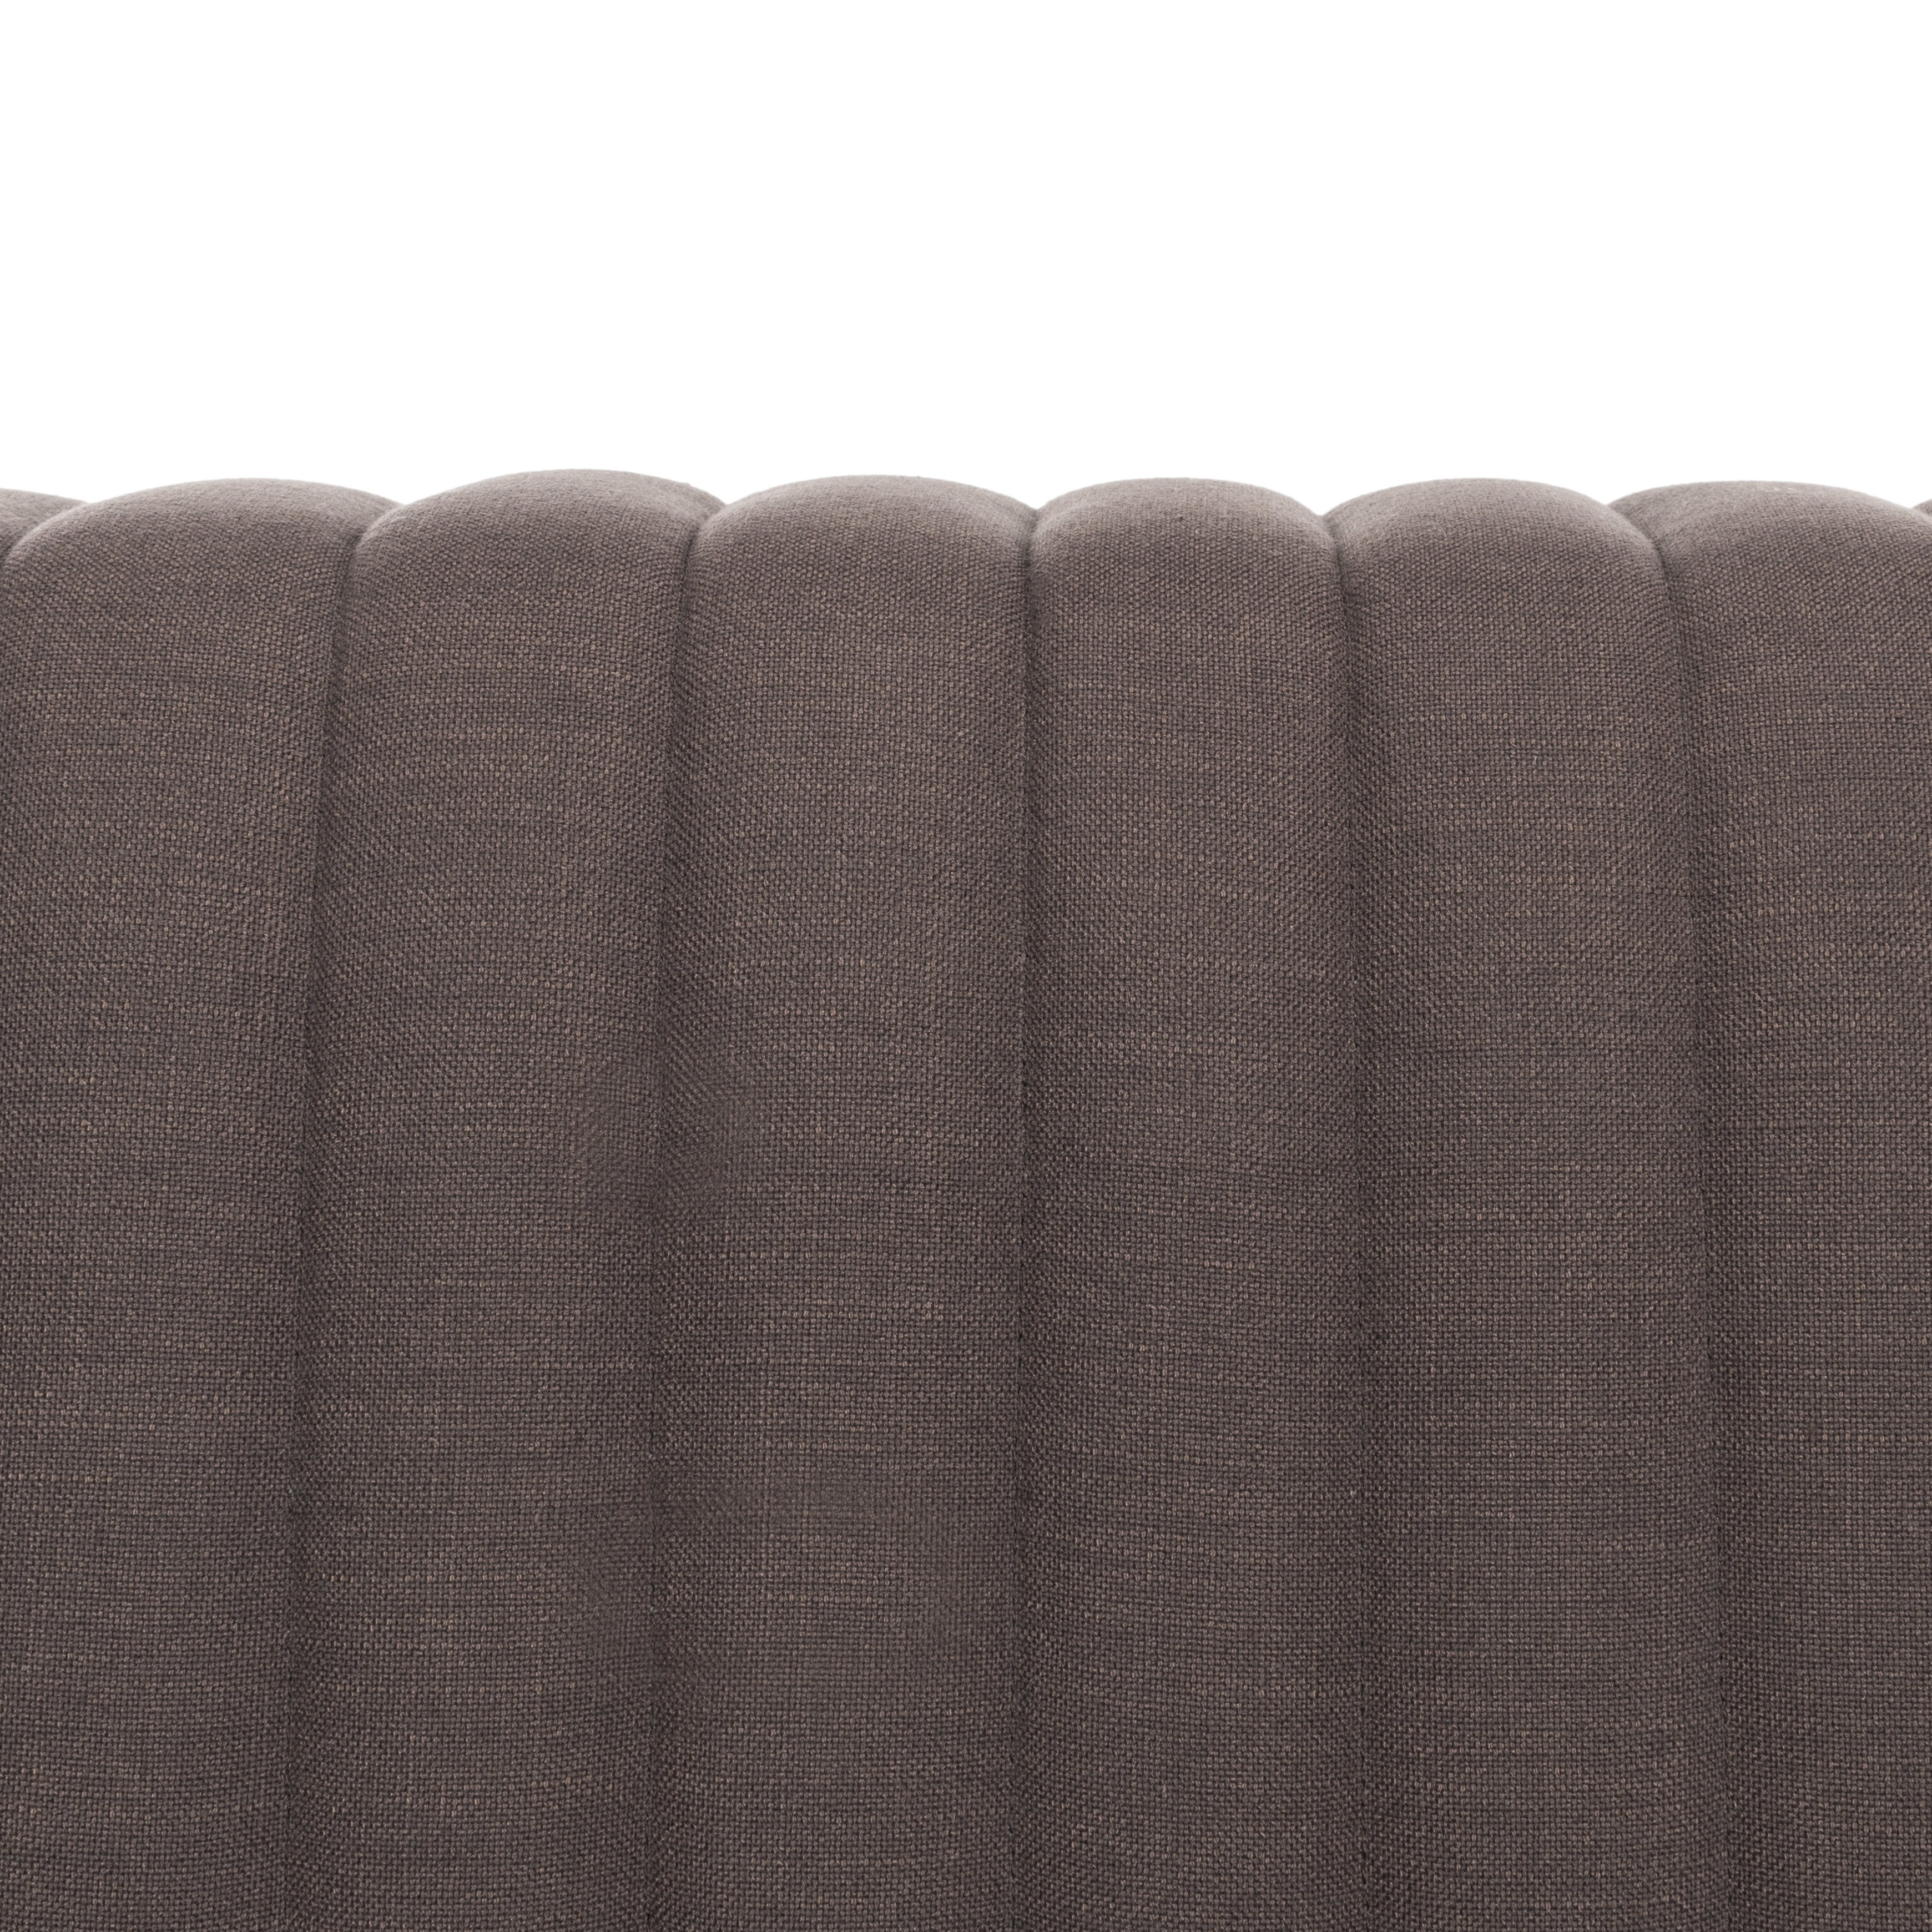 Carmina Channeled Linen Sofa - Brown - Arlo Home - Image 6